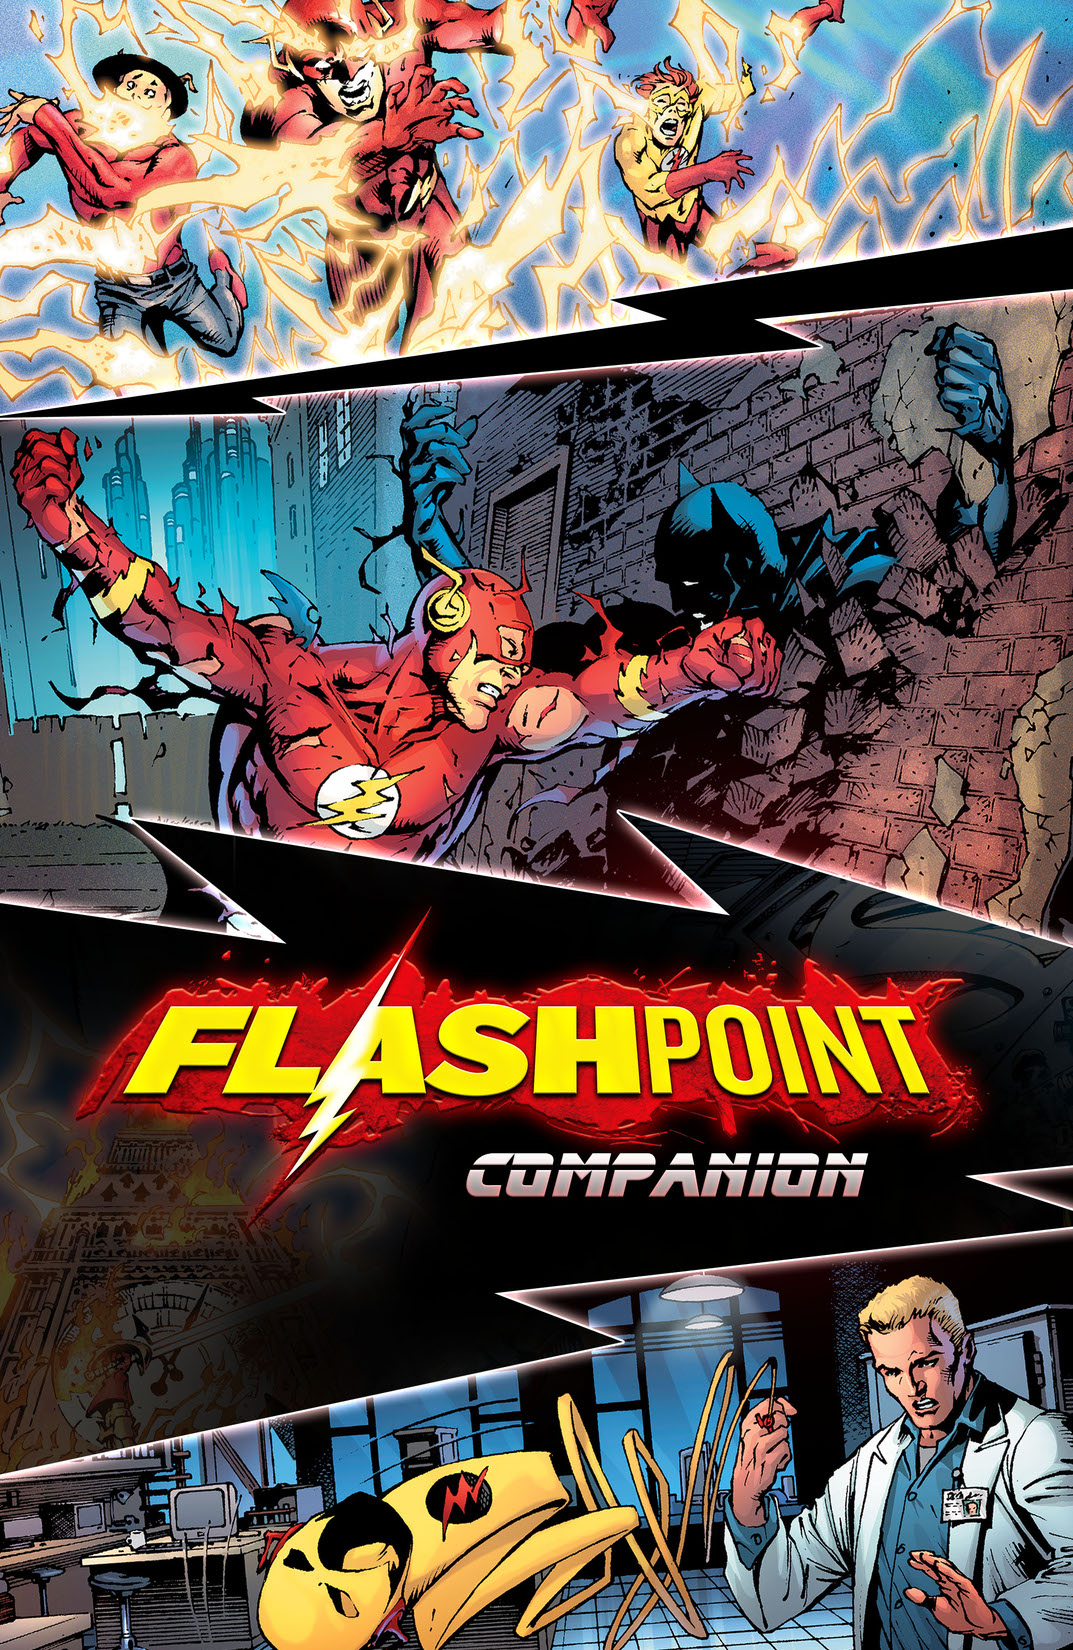 Flashpoint Companion #1 preview images